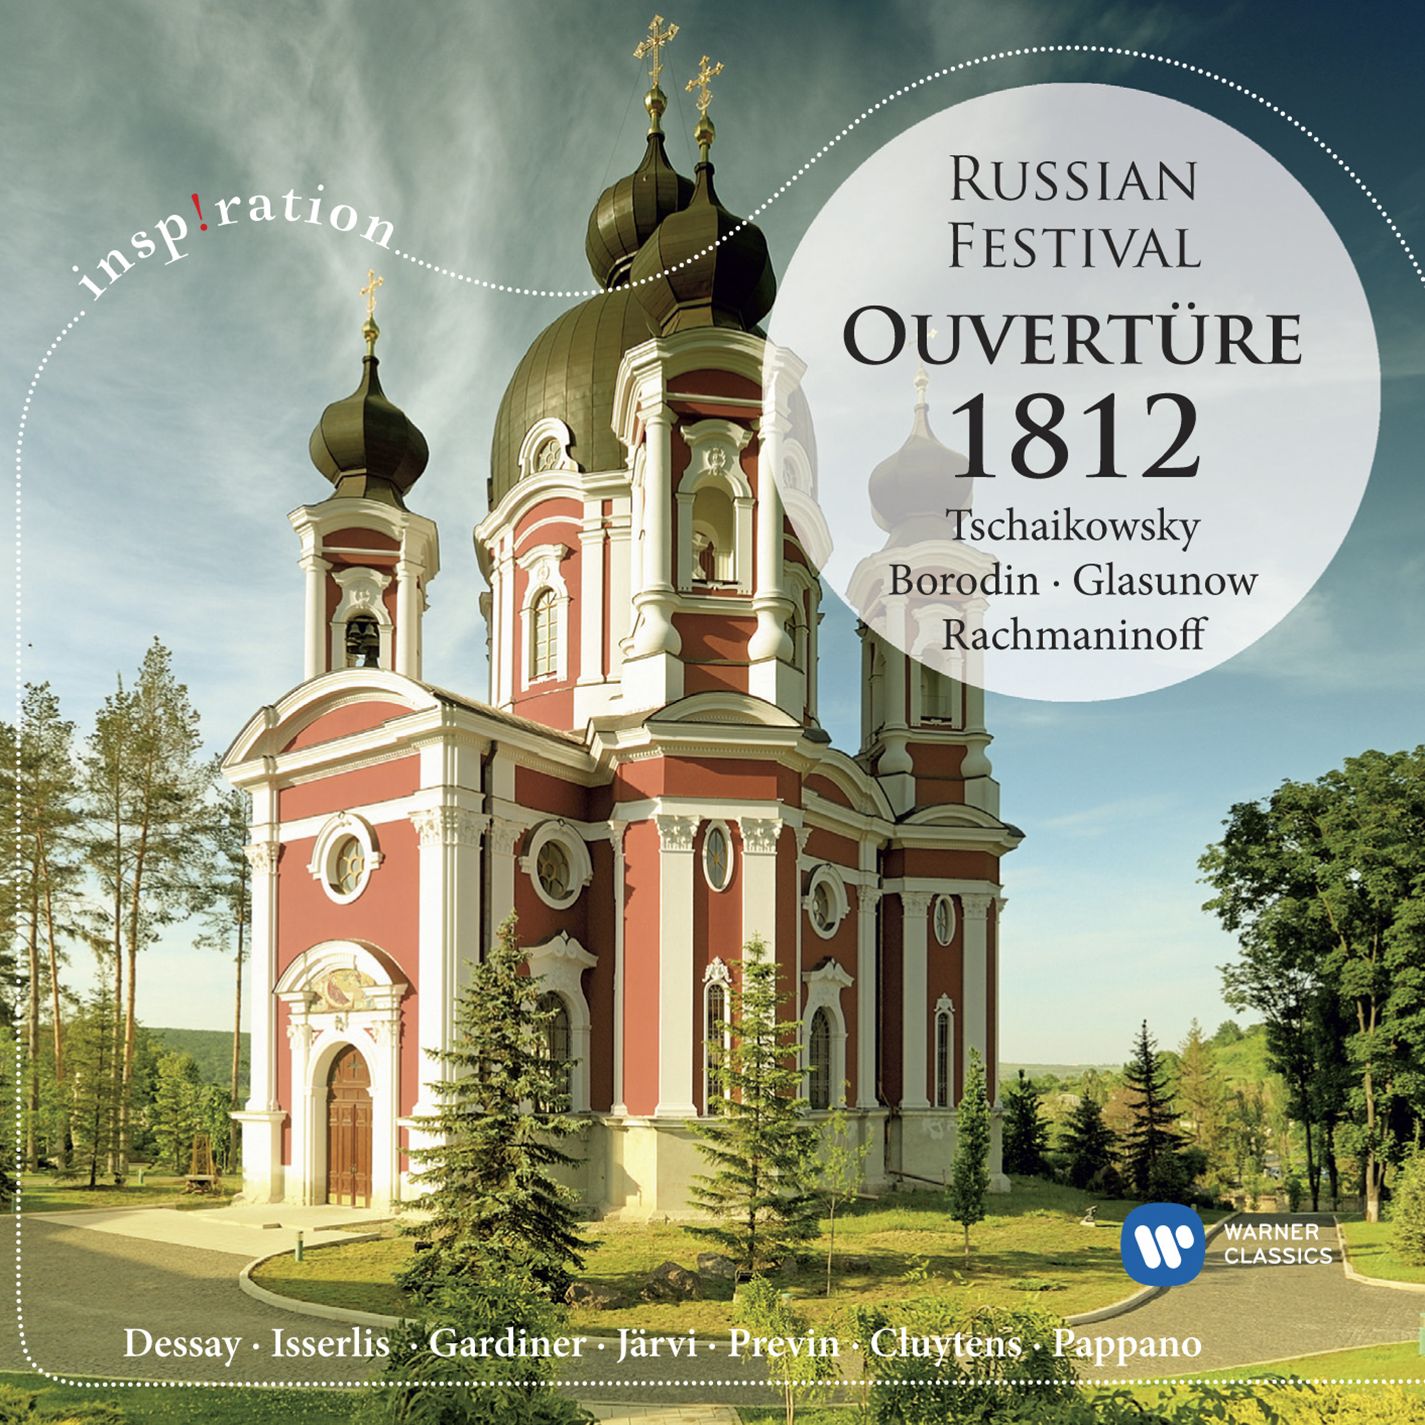 Ouvertü re 1812: Russian Festival